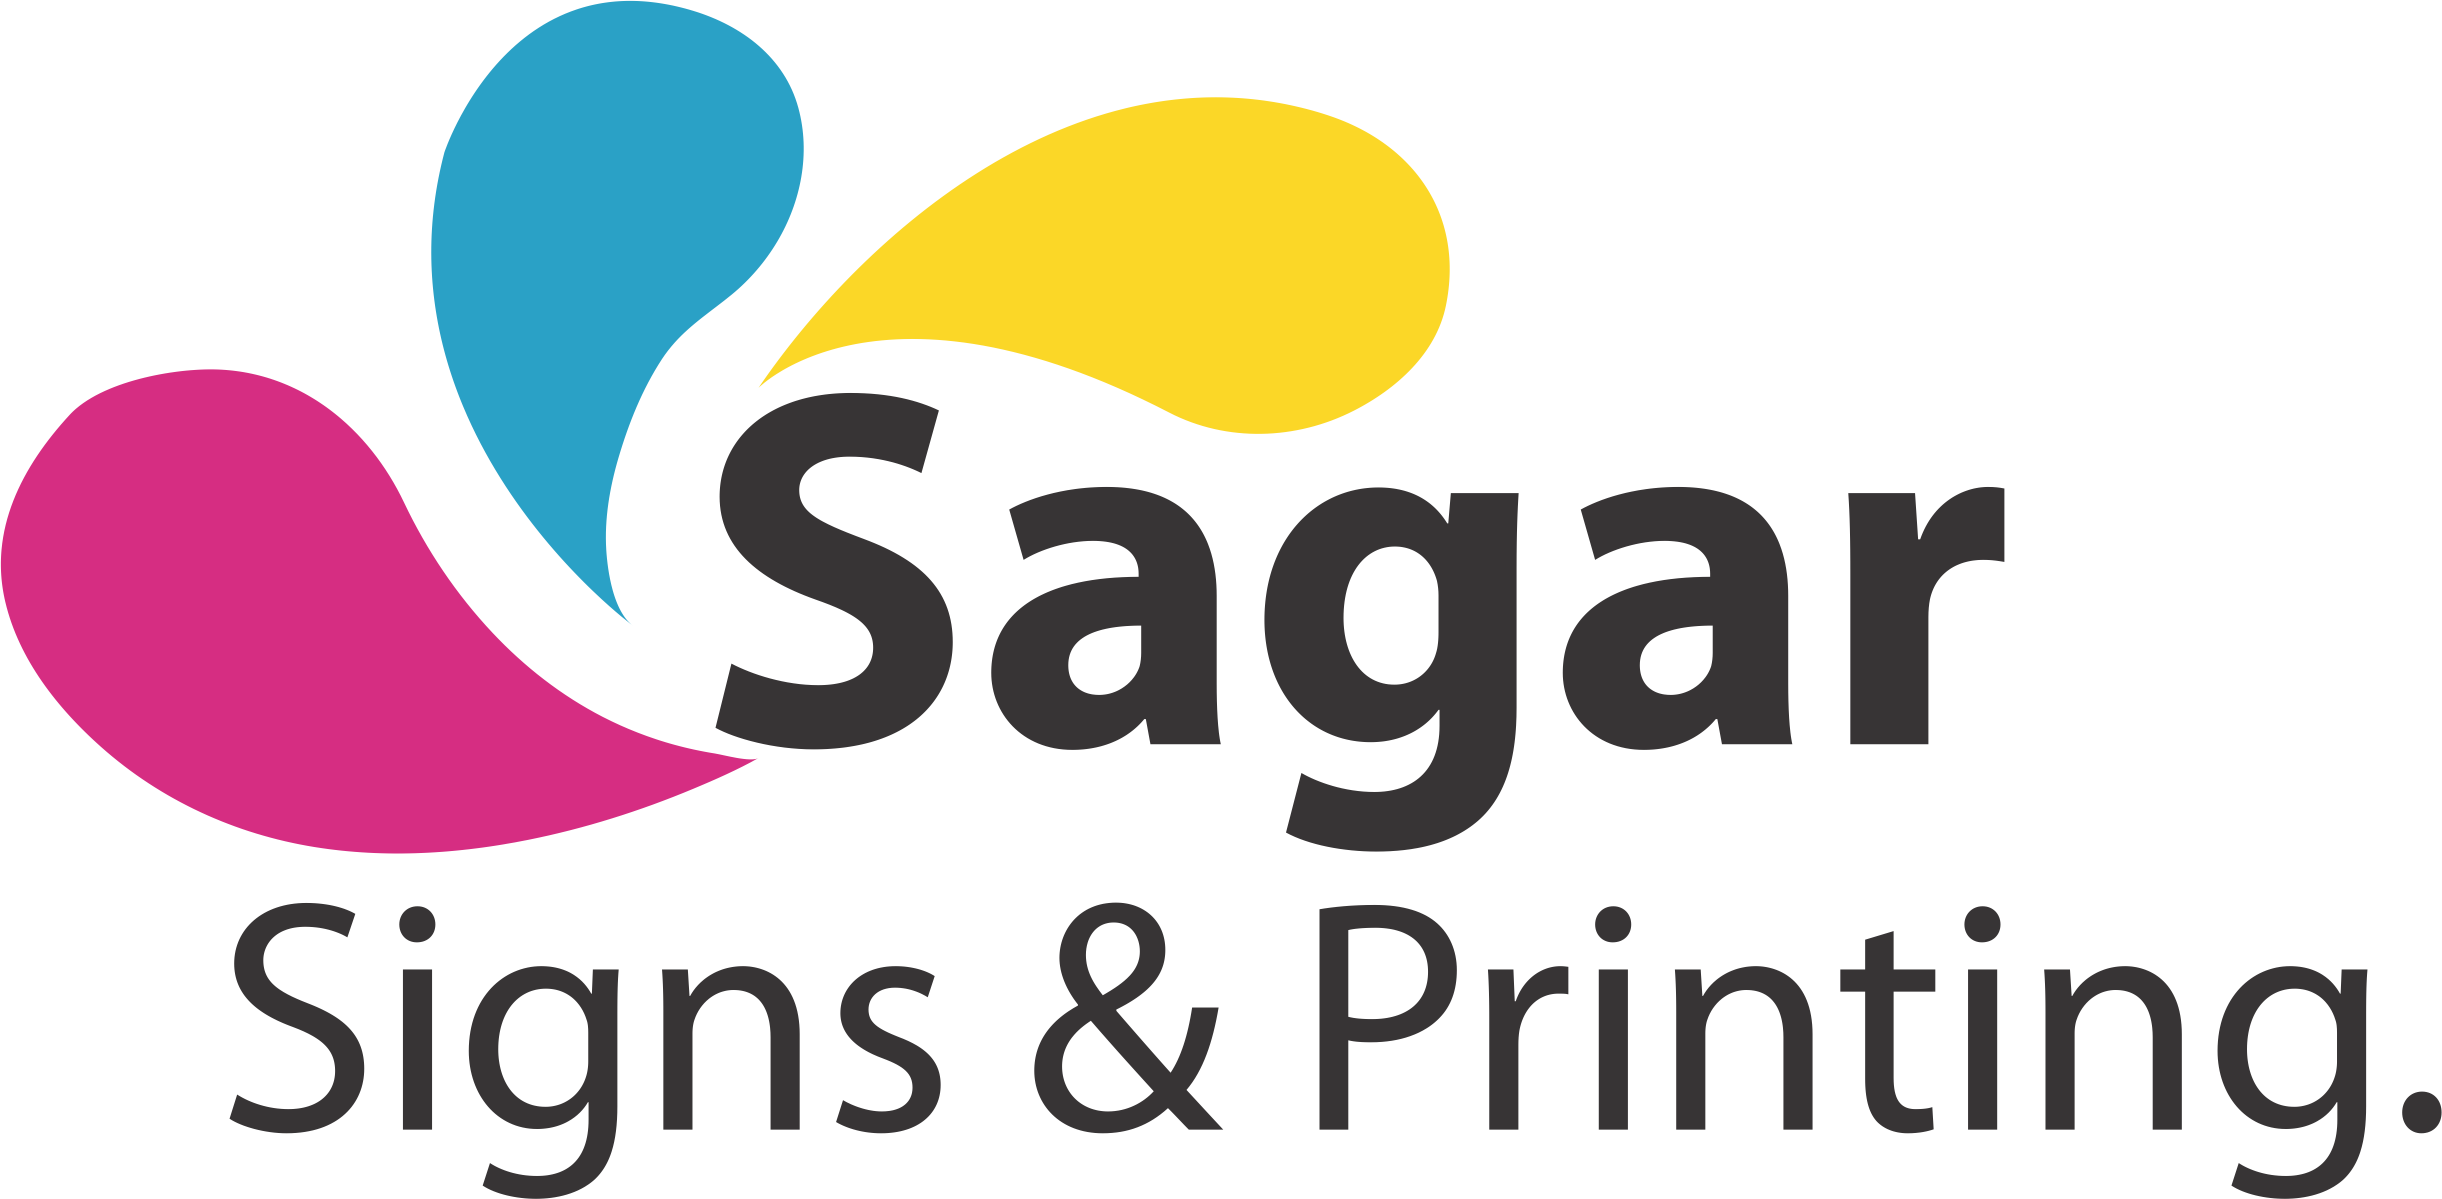 Sagar Signs & Printing Services in Calgary, Alberta - Sagar Signs Printing Services, Business Card, T-shirt, Websites, Digital Marketing